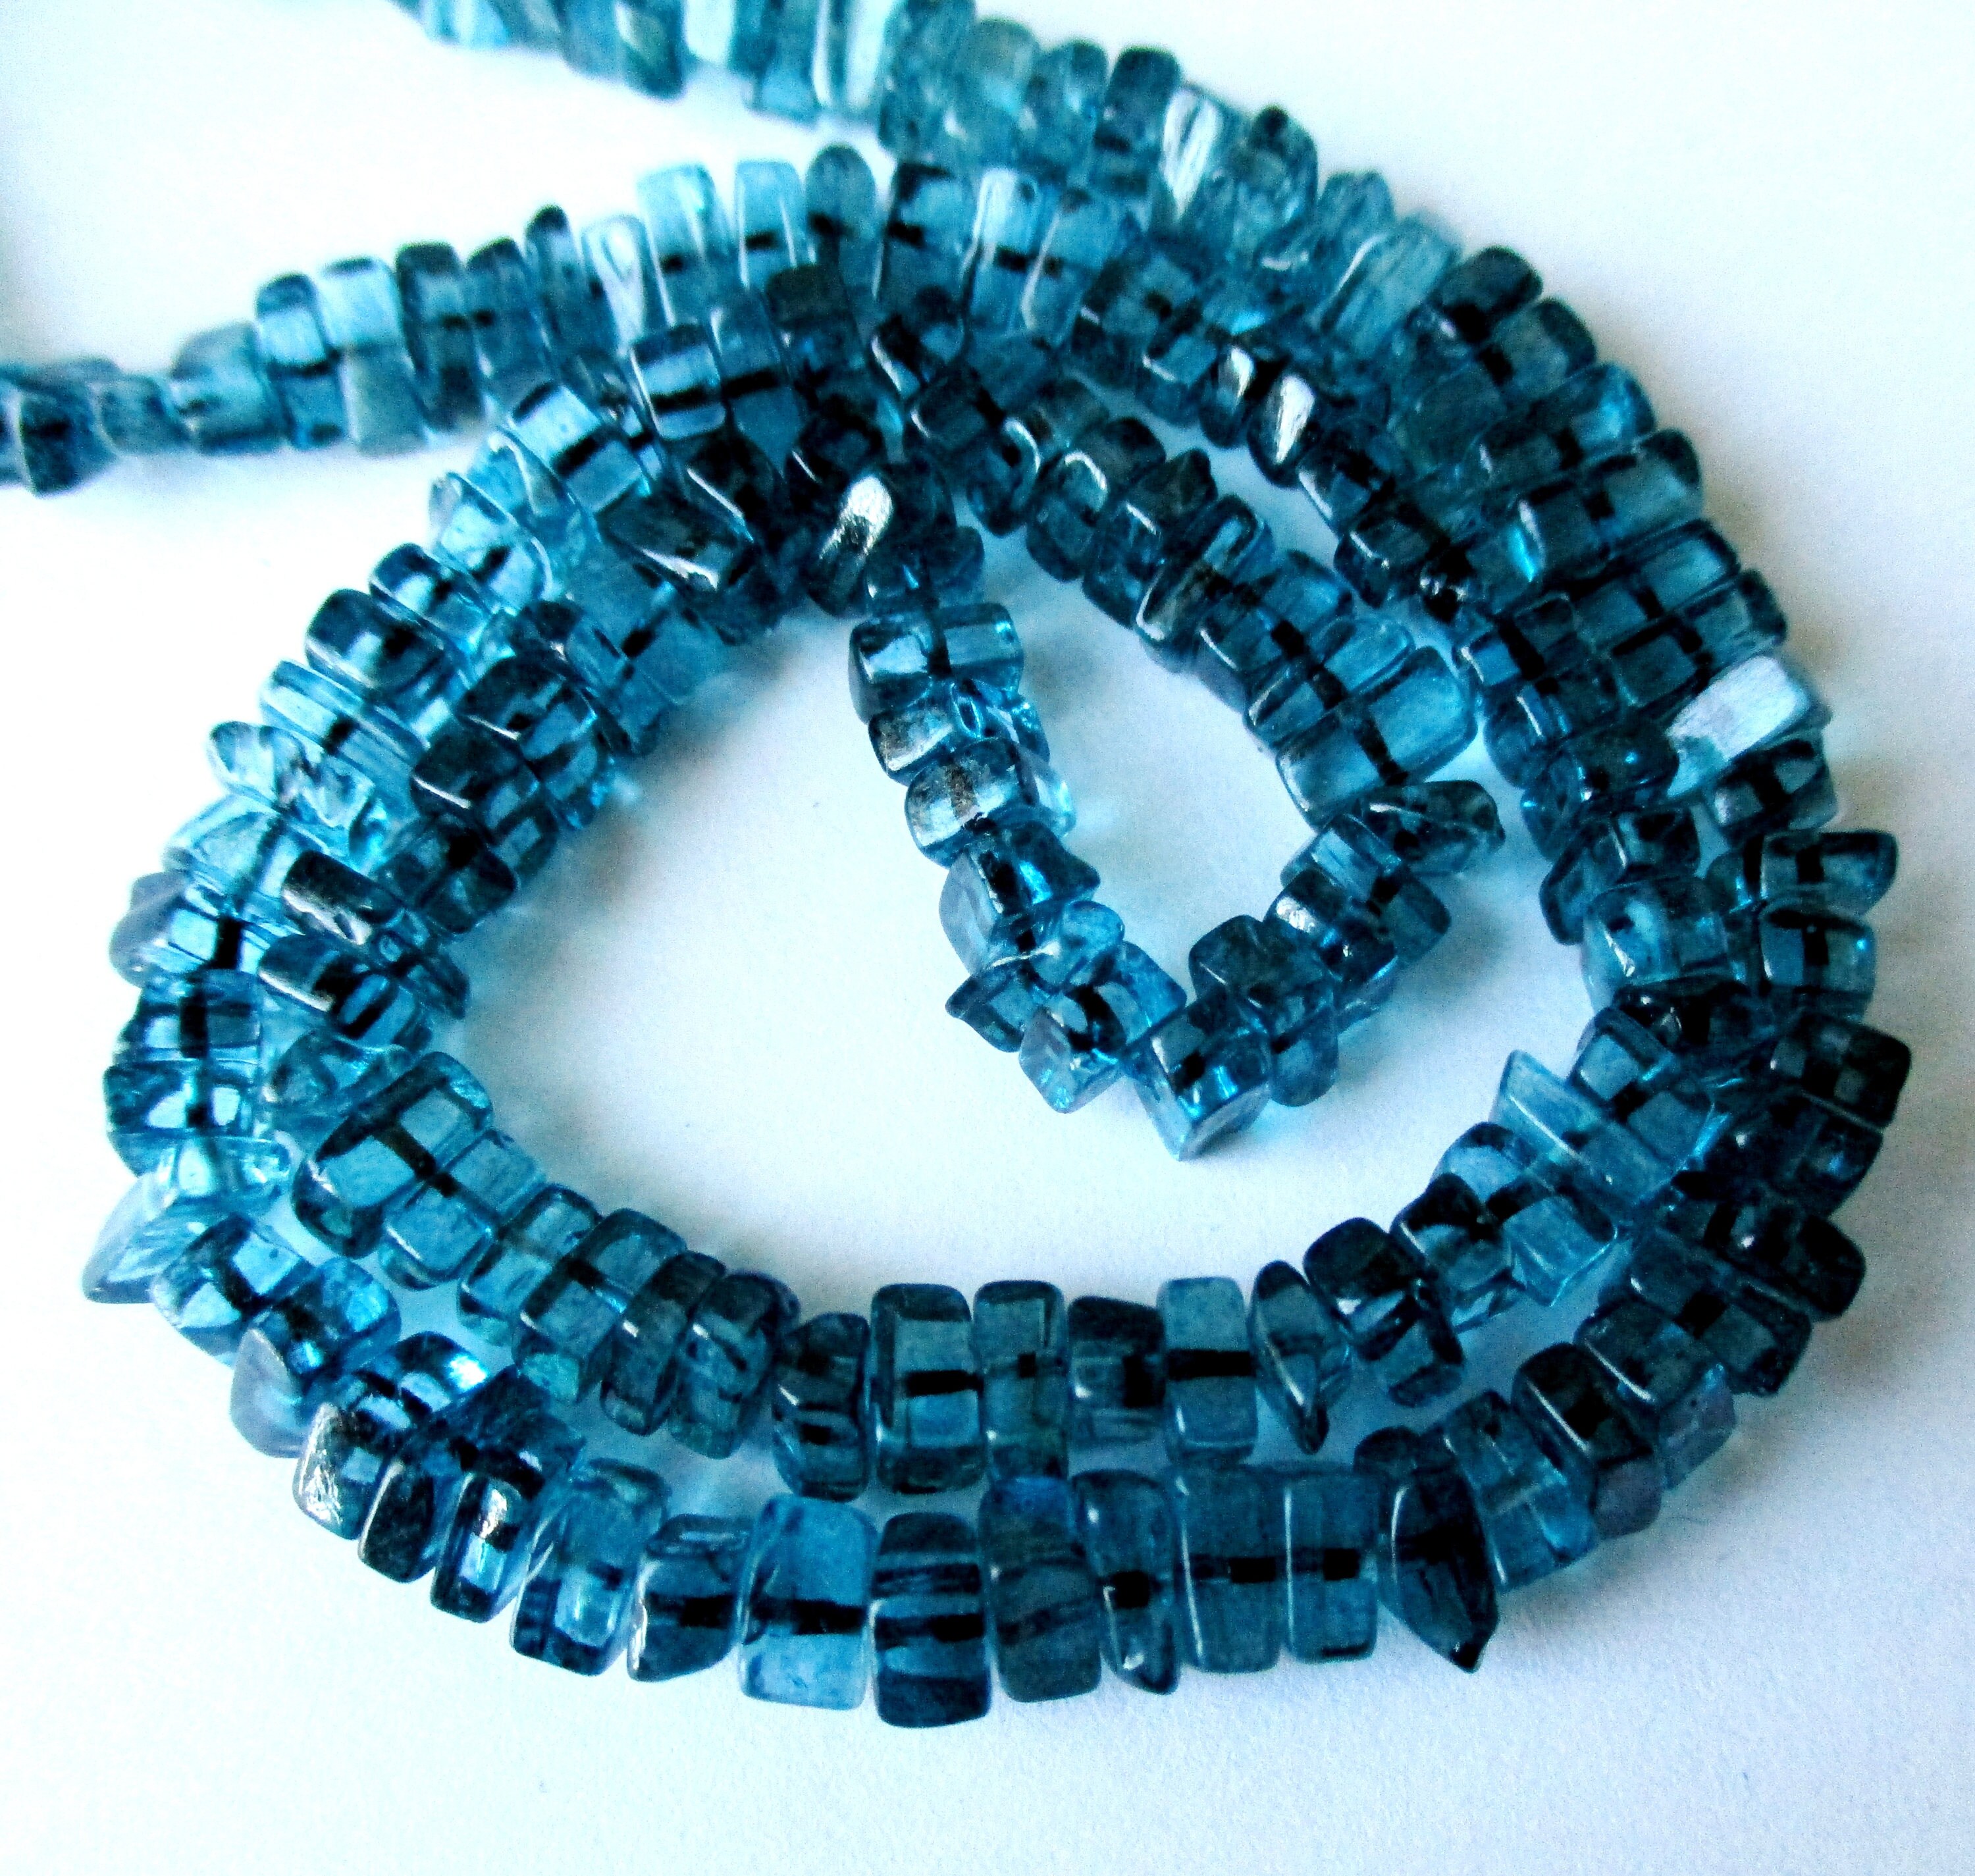 Teal blue/london quartz smooth polished square heishi beads- 4-5mm- 8 ...